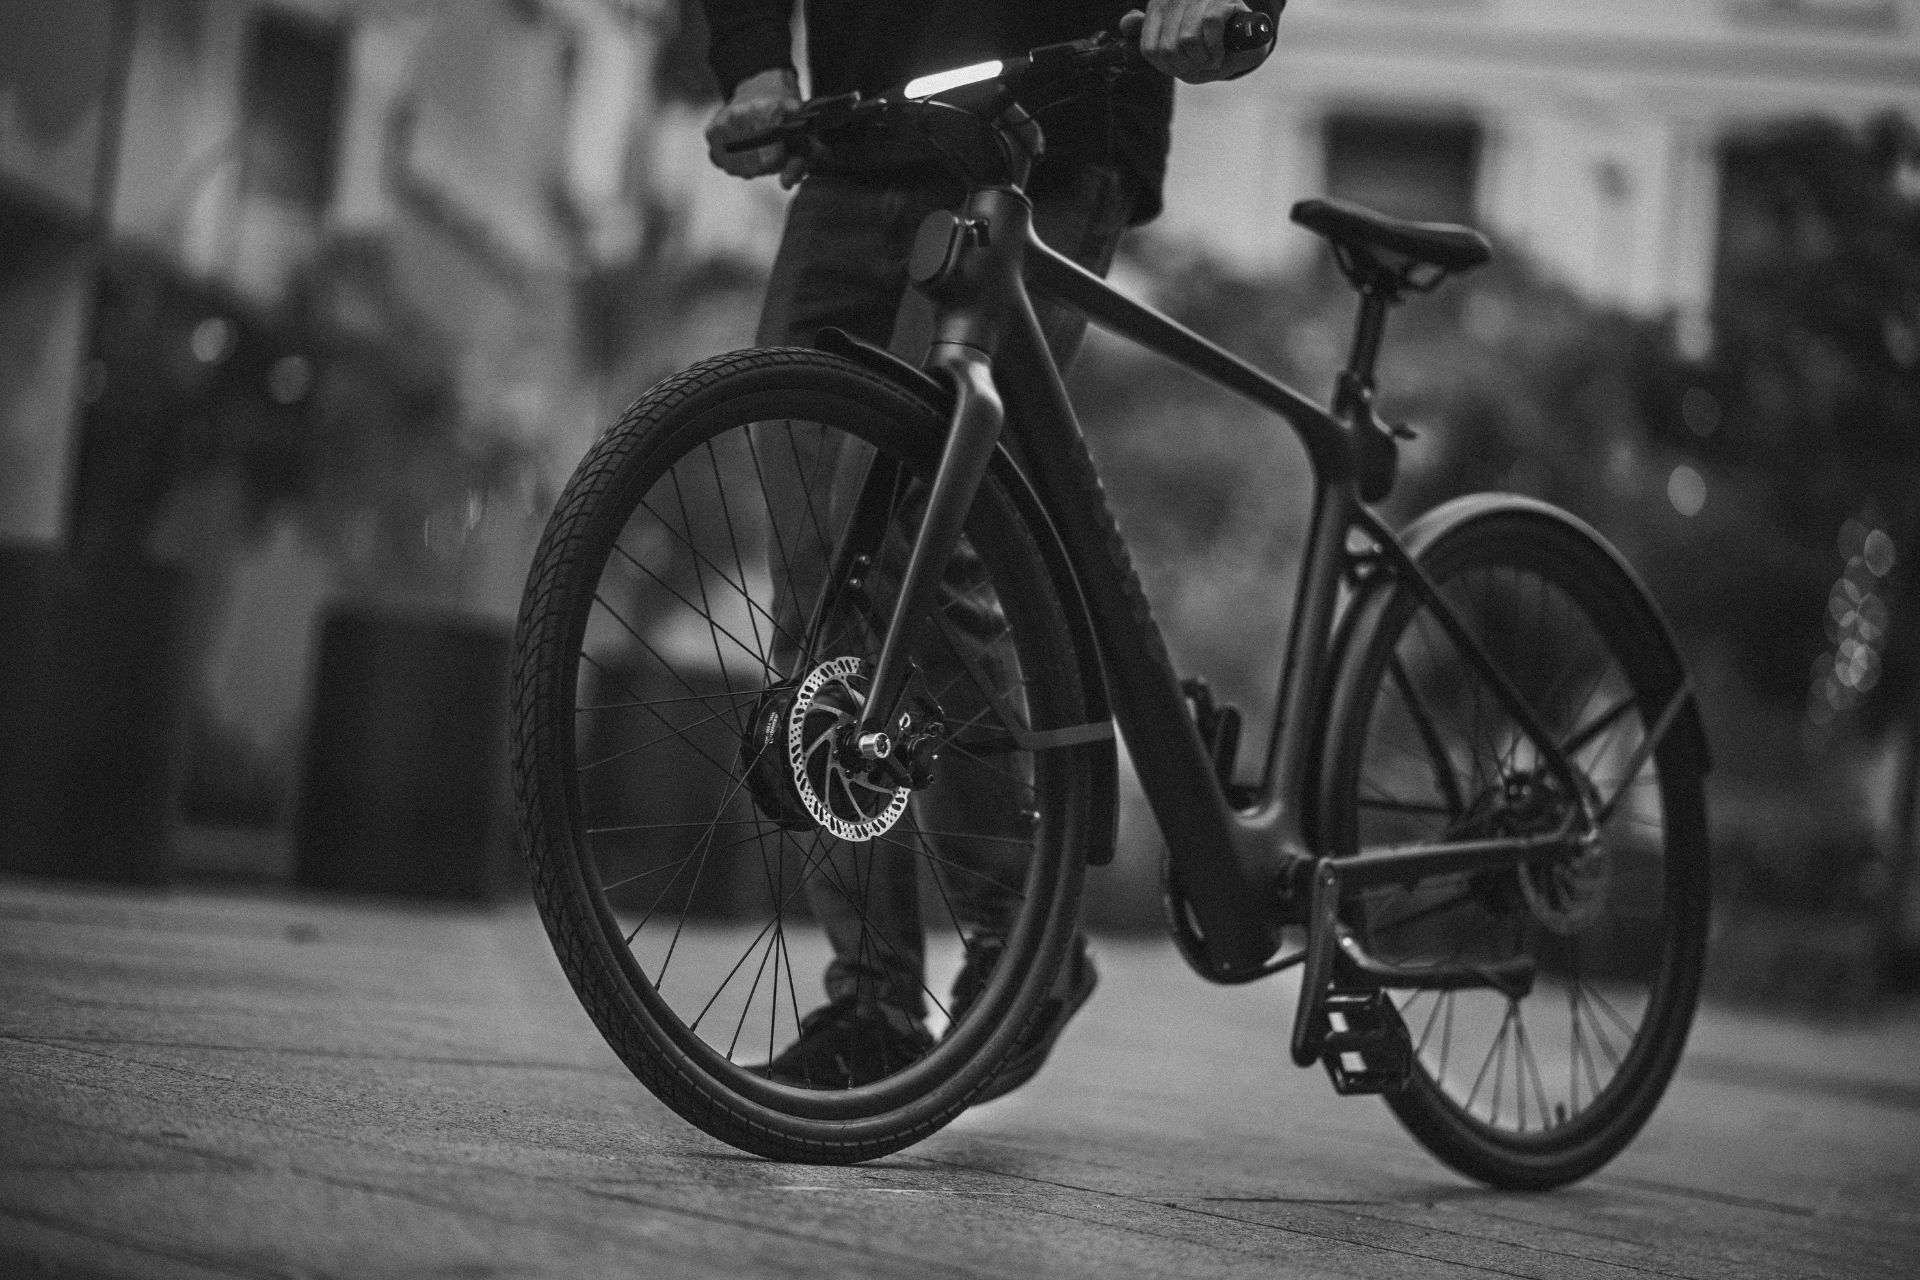 Modmo Saigon+ Electric Bicycle - RRP £2800 - Size S (Rider: 140-155cm) - Image 10 of 18